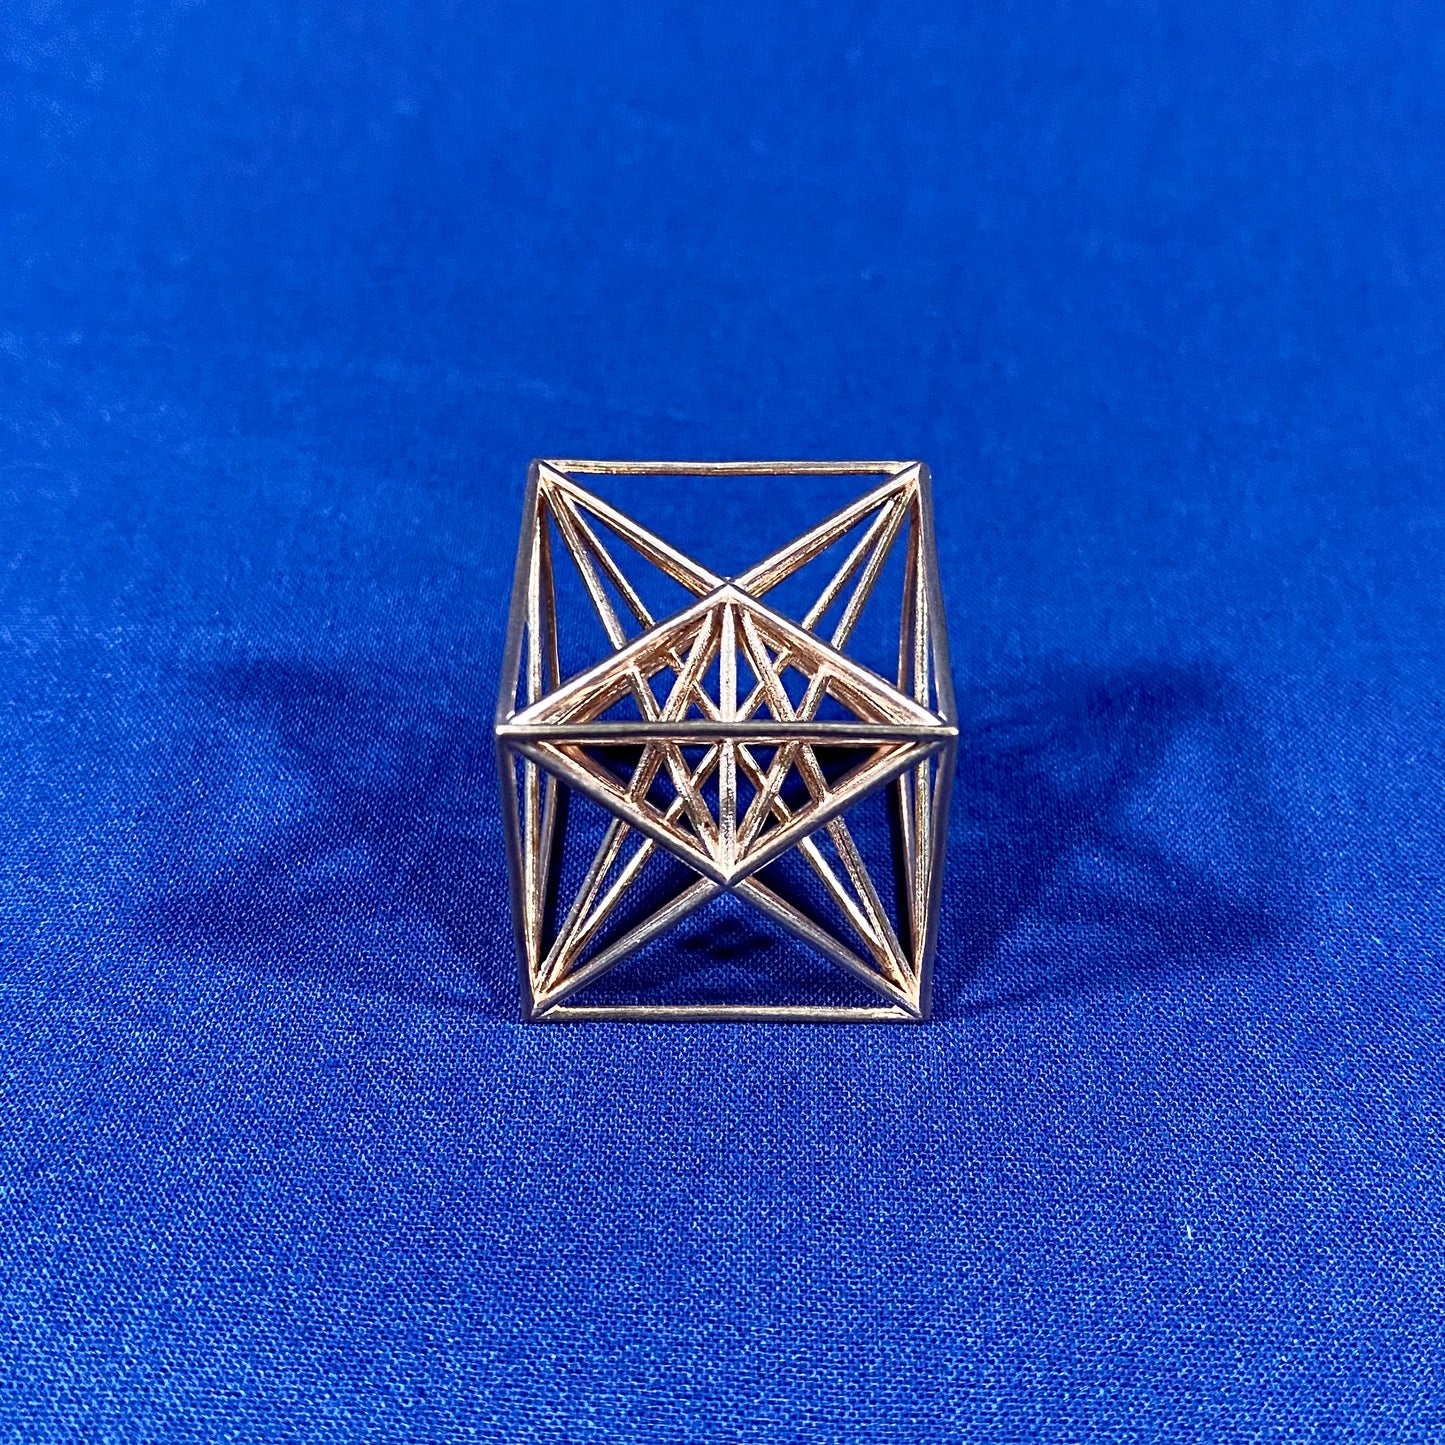 Metatron's Cube Sculpture